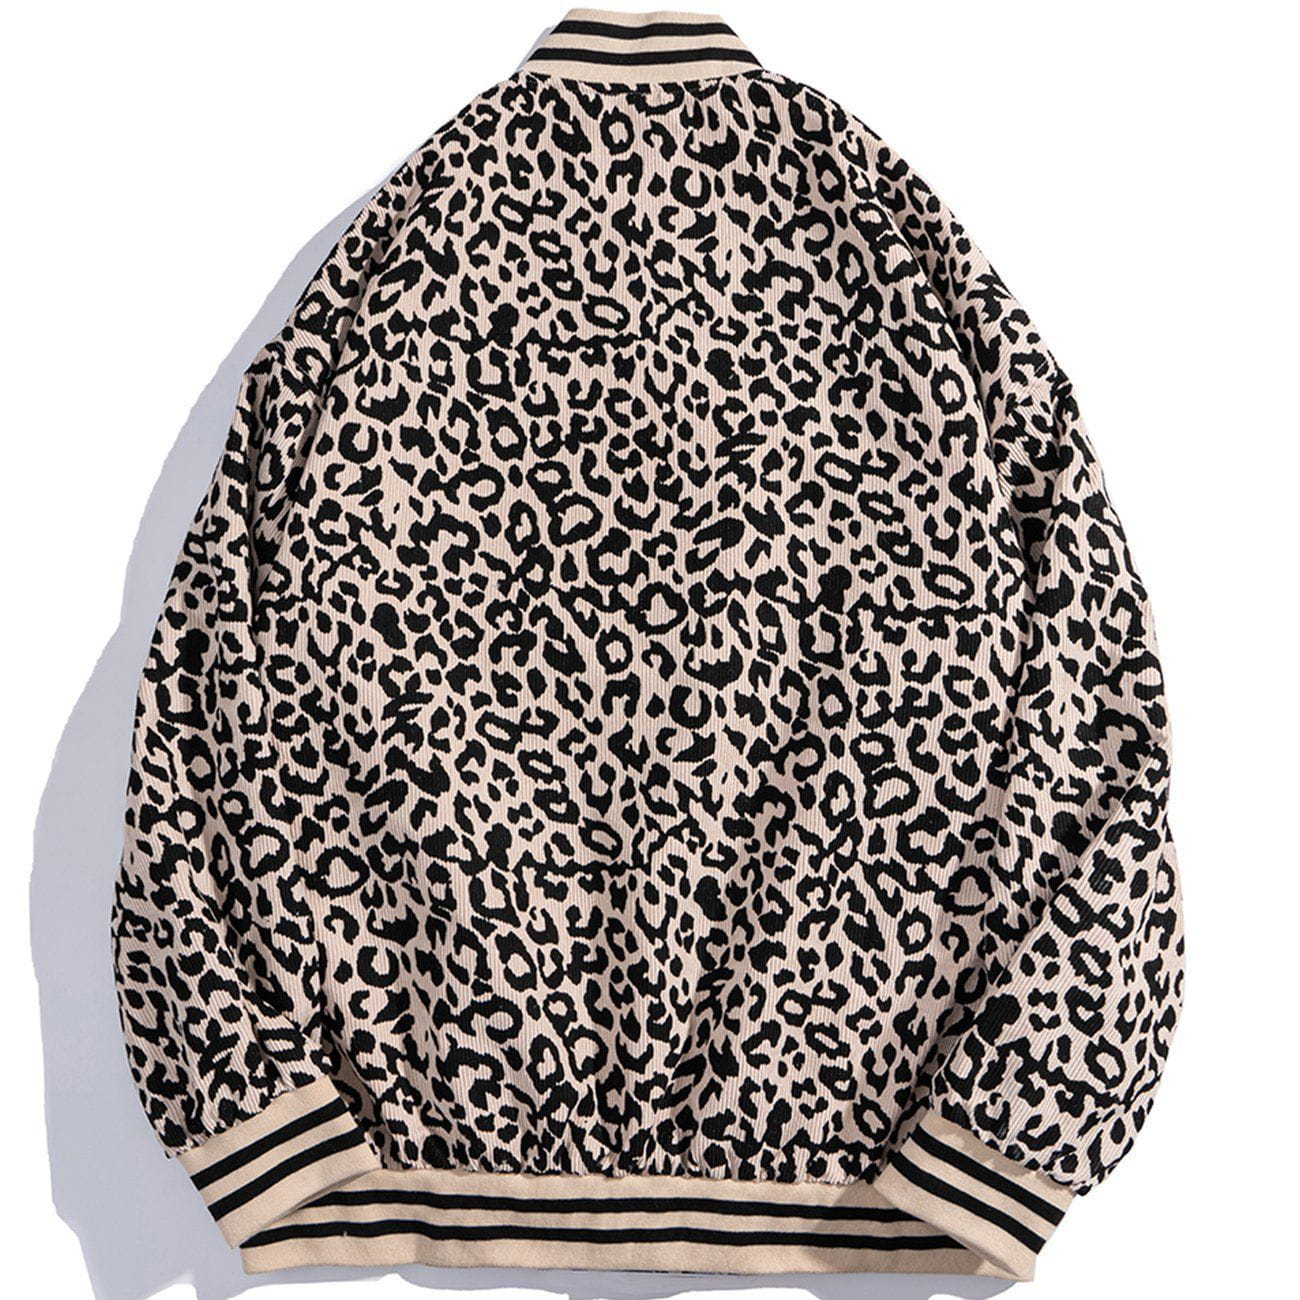 Eprezzy® - Leopard Letter Embroidery Corduroy Jacket Streetwear Fashion - eprezzy.com